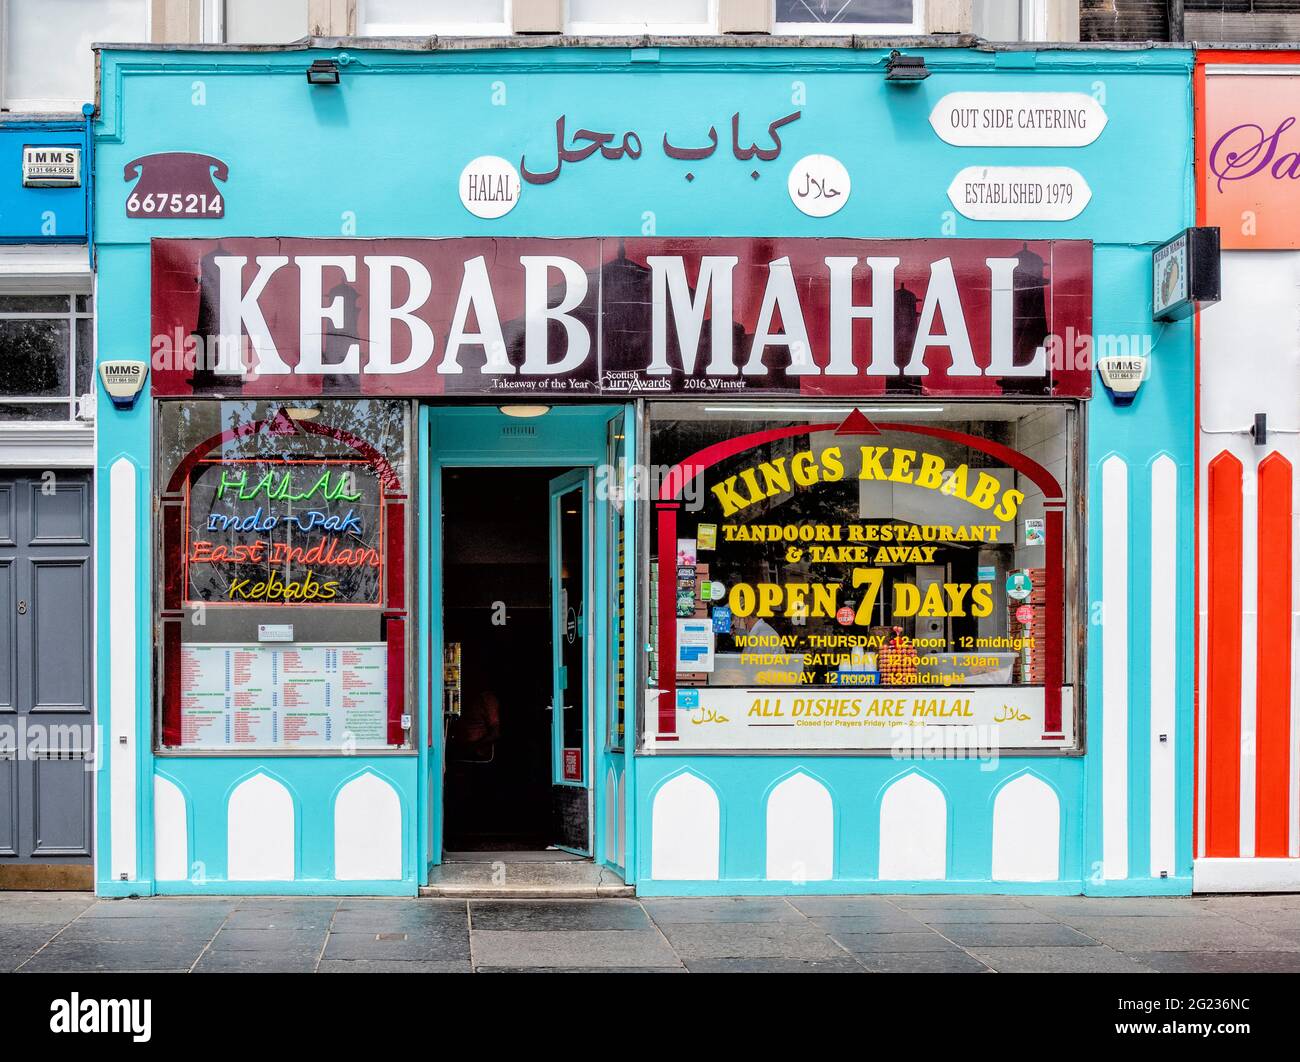 Kebab Mahal - Indian Restaurant & Takeaway, Nicolson Square, Edinburgh, Scotland, UK. Stock Photo